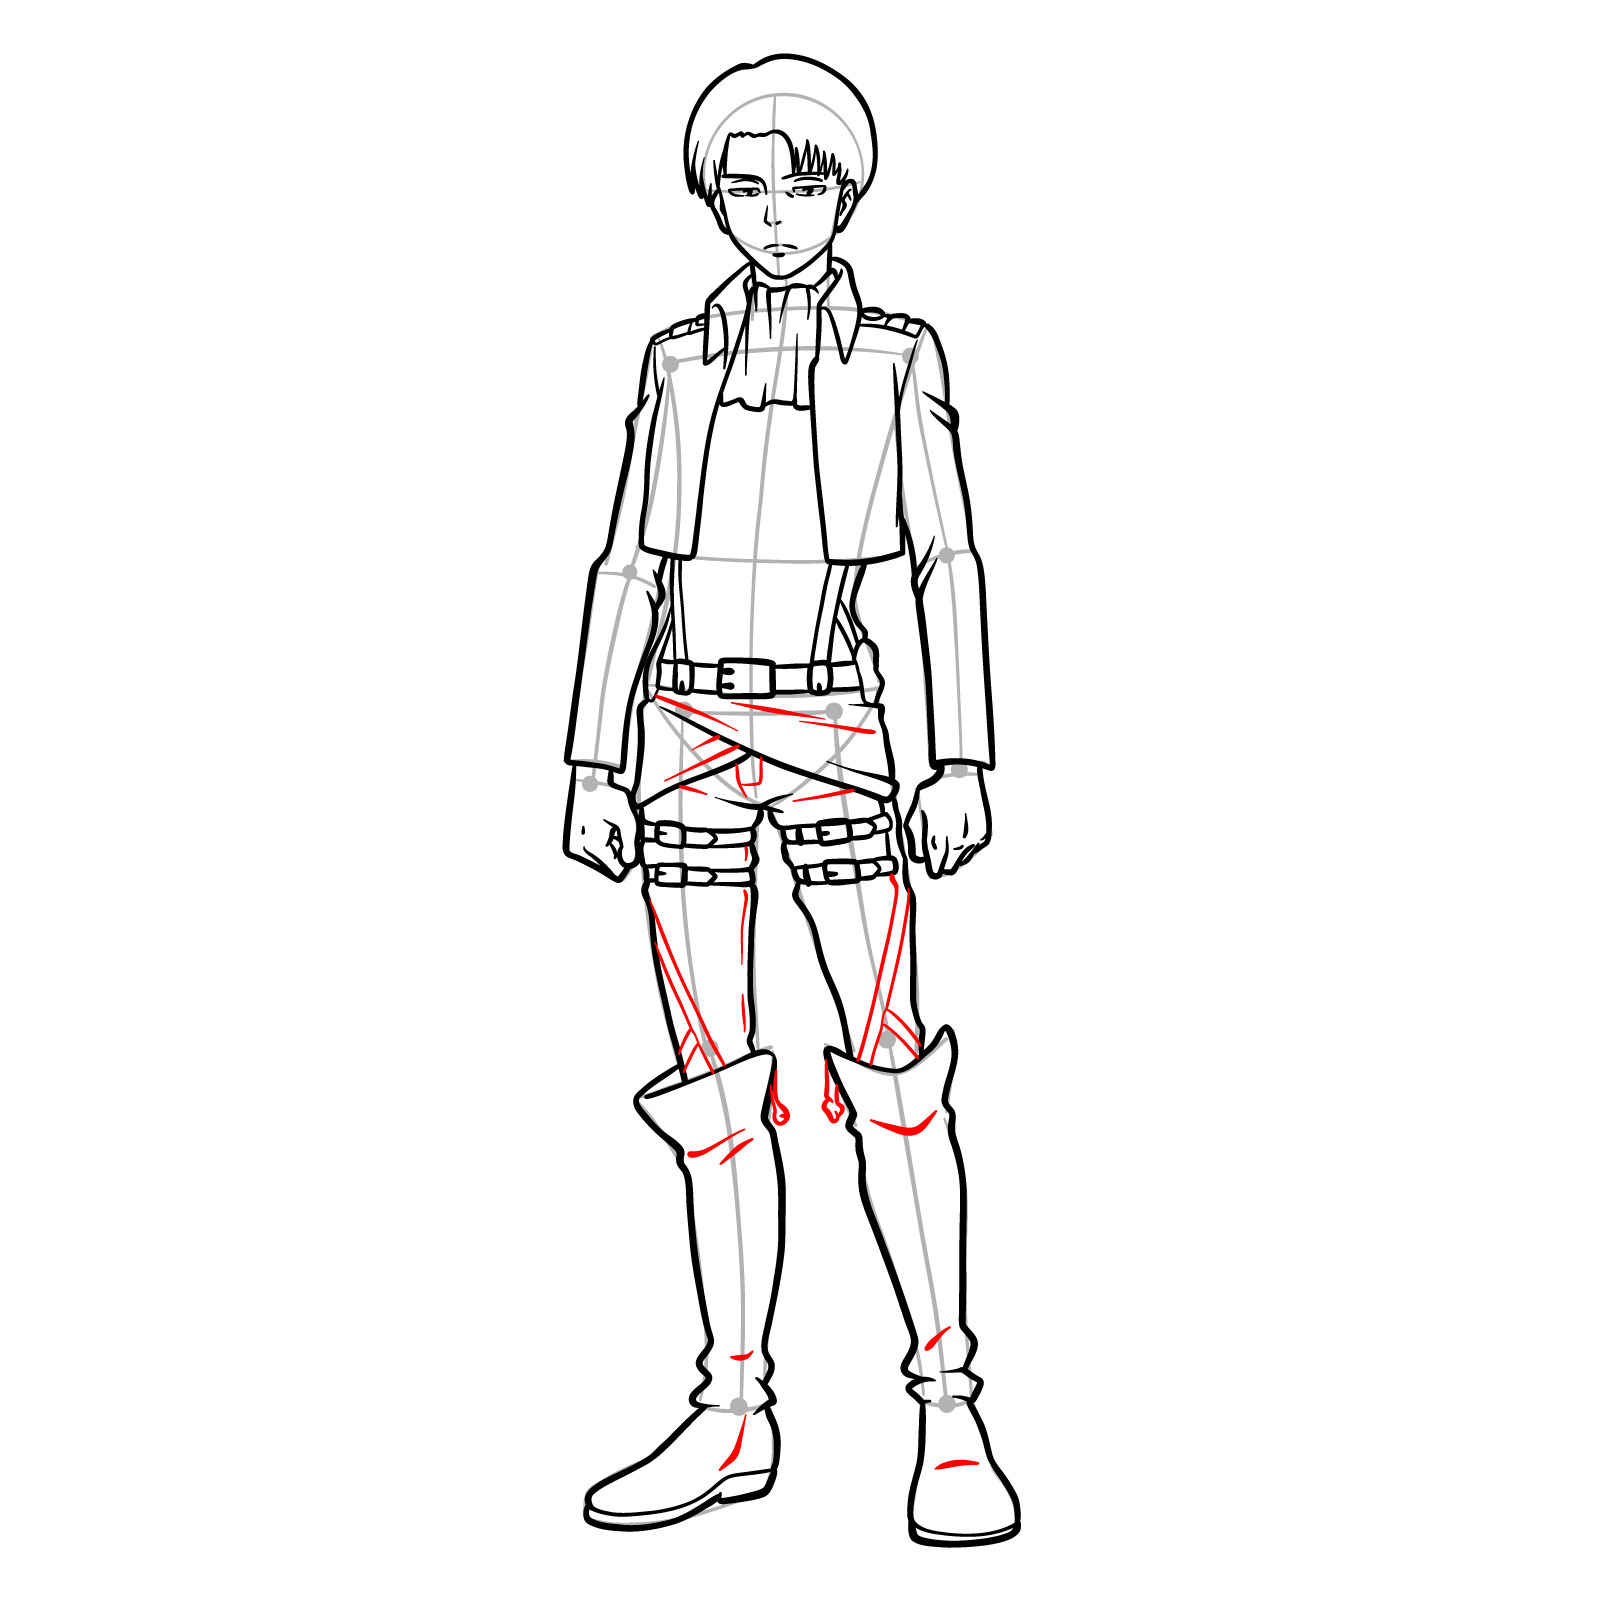 Illustration tutorial for Levi's leg straps, pants, and footwear details - step 23